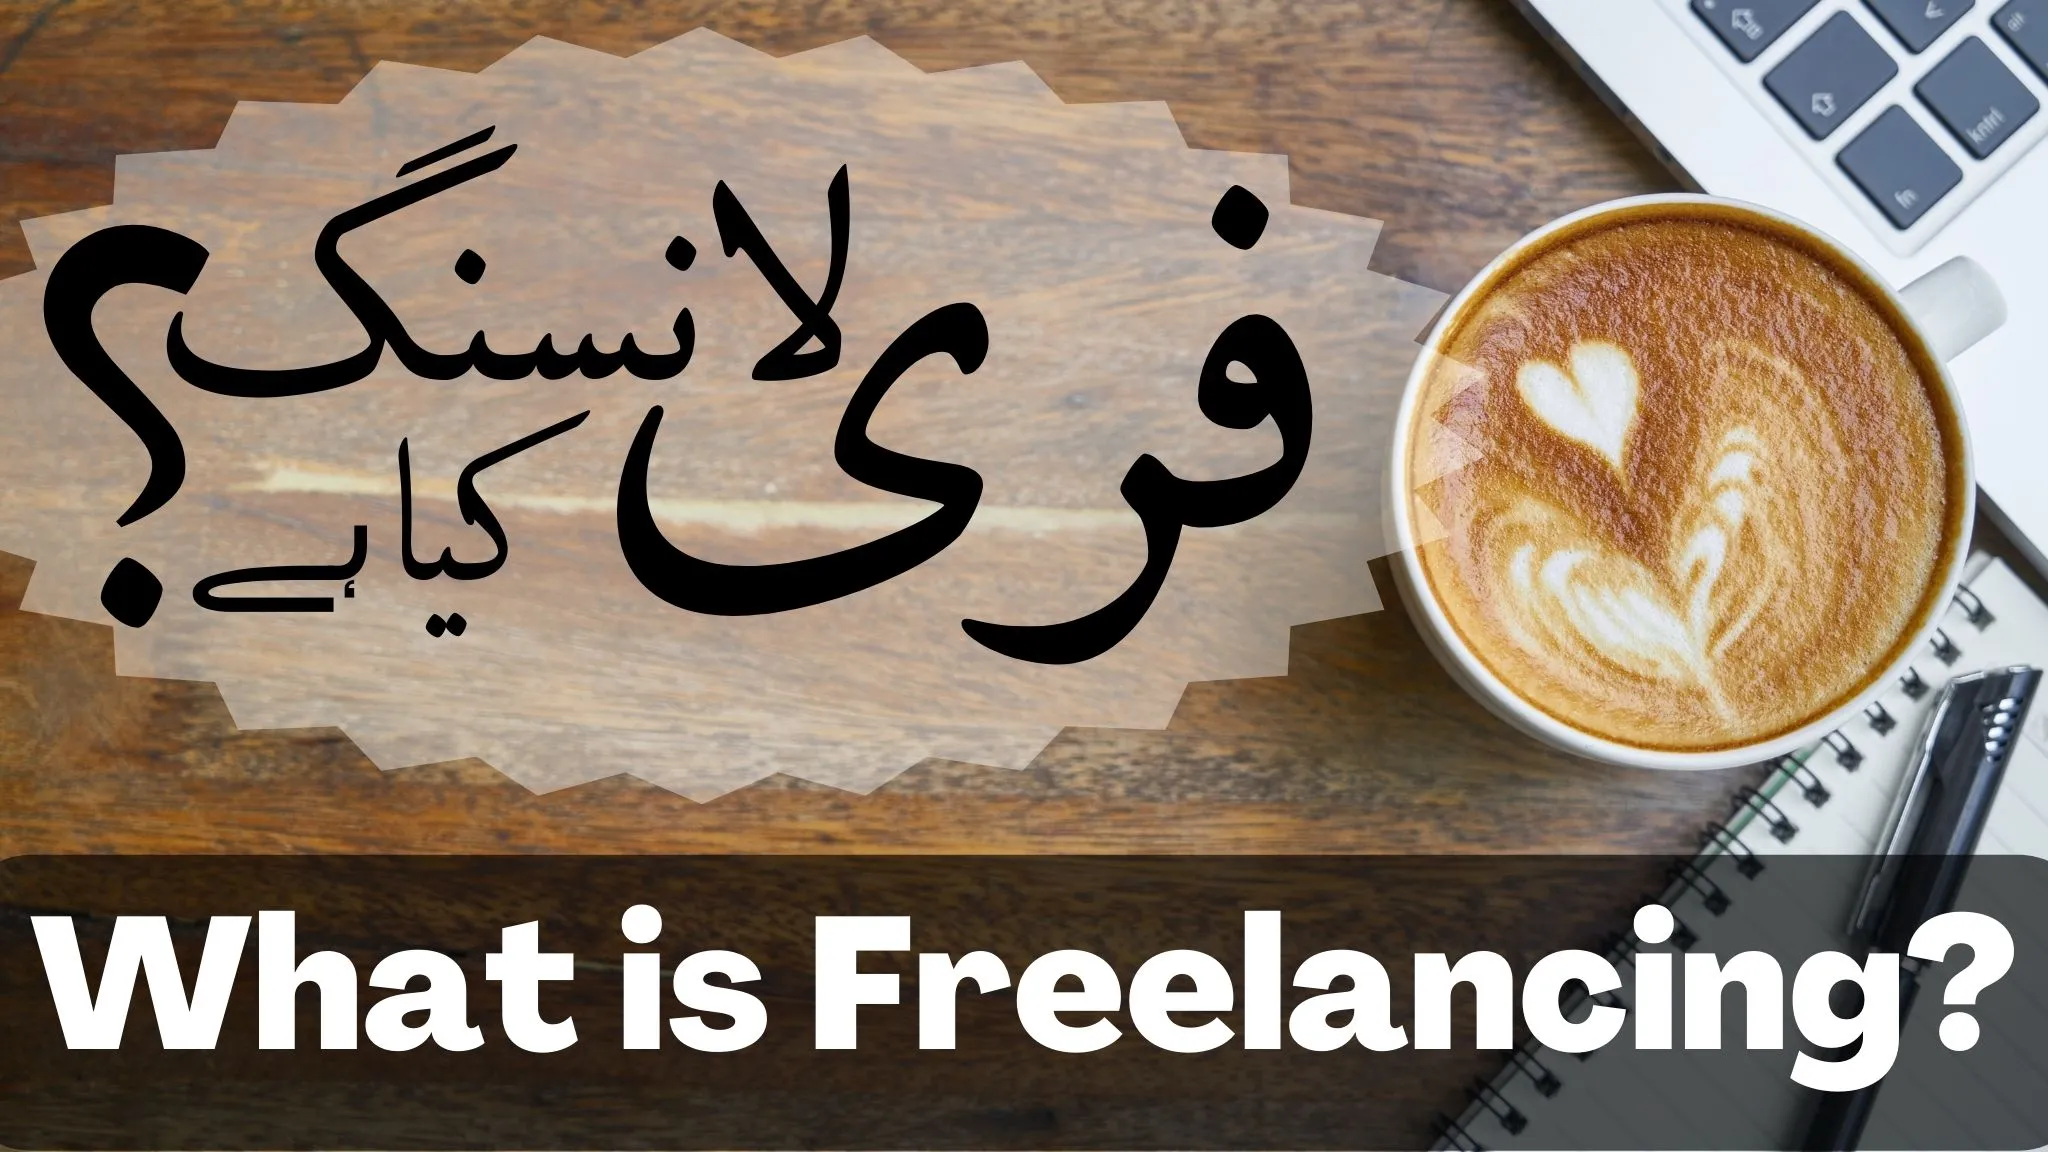 Freelancing meaning in Urdu فری لانسنگ کیا ہے؟